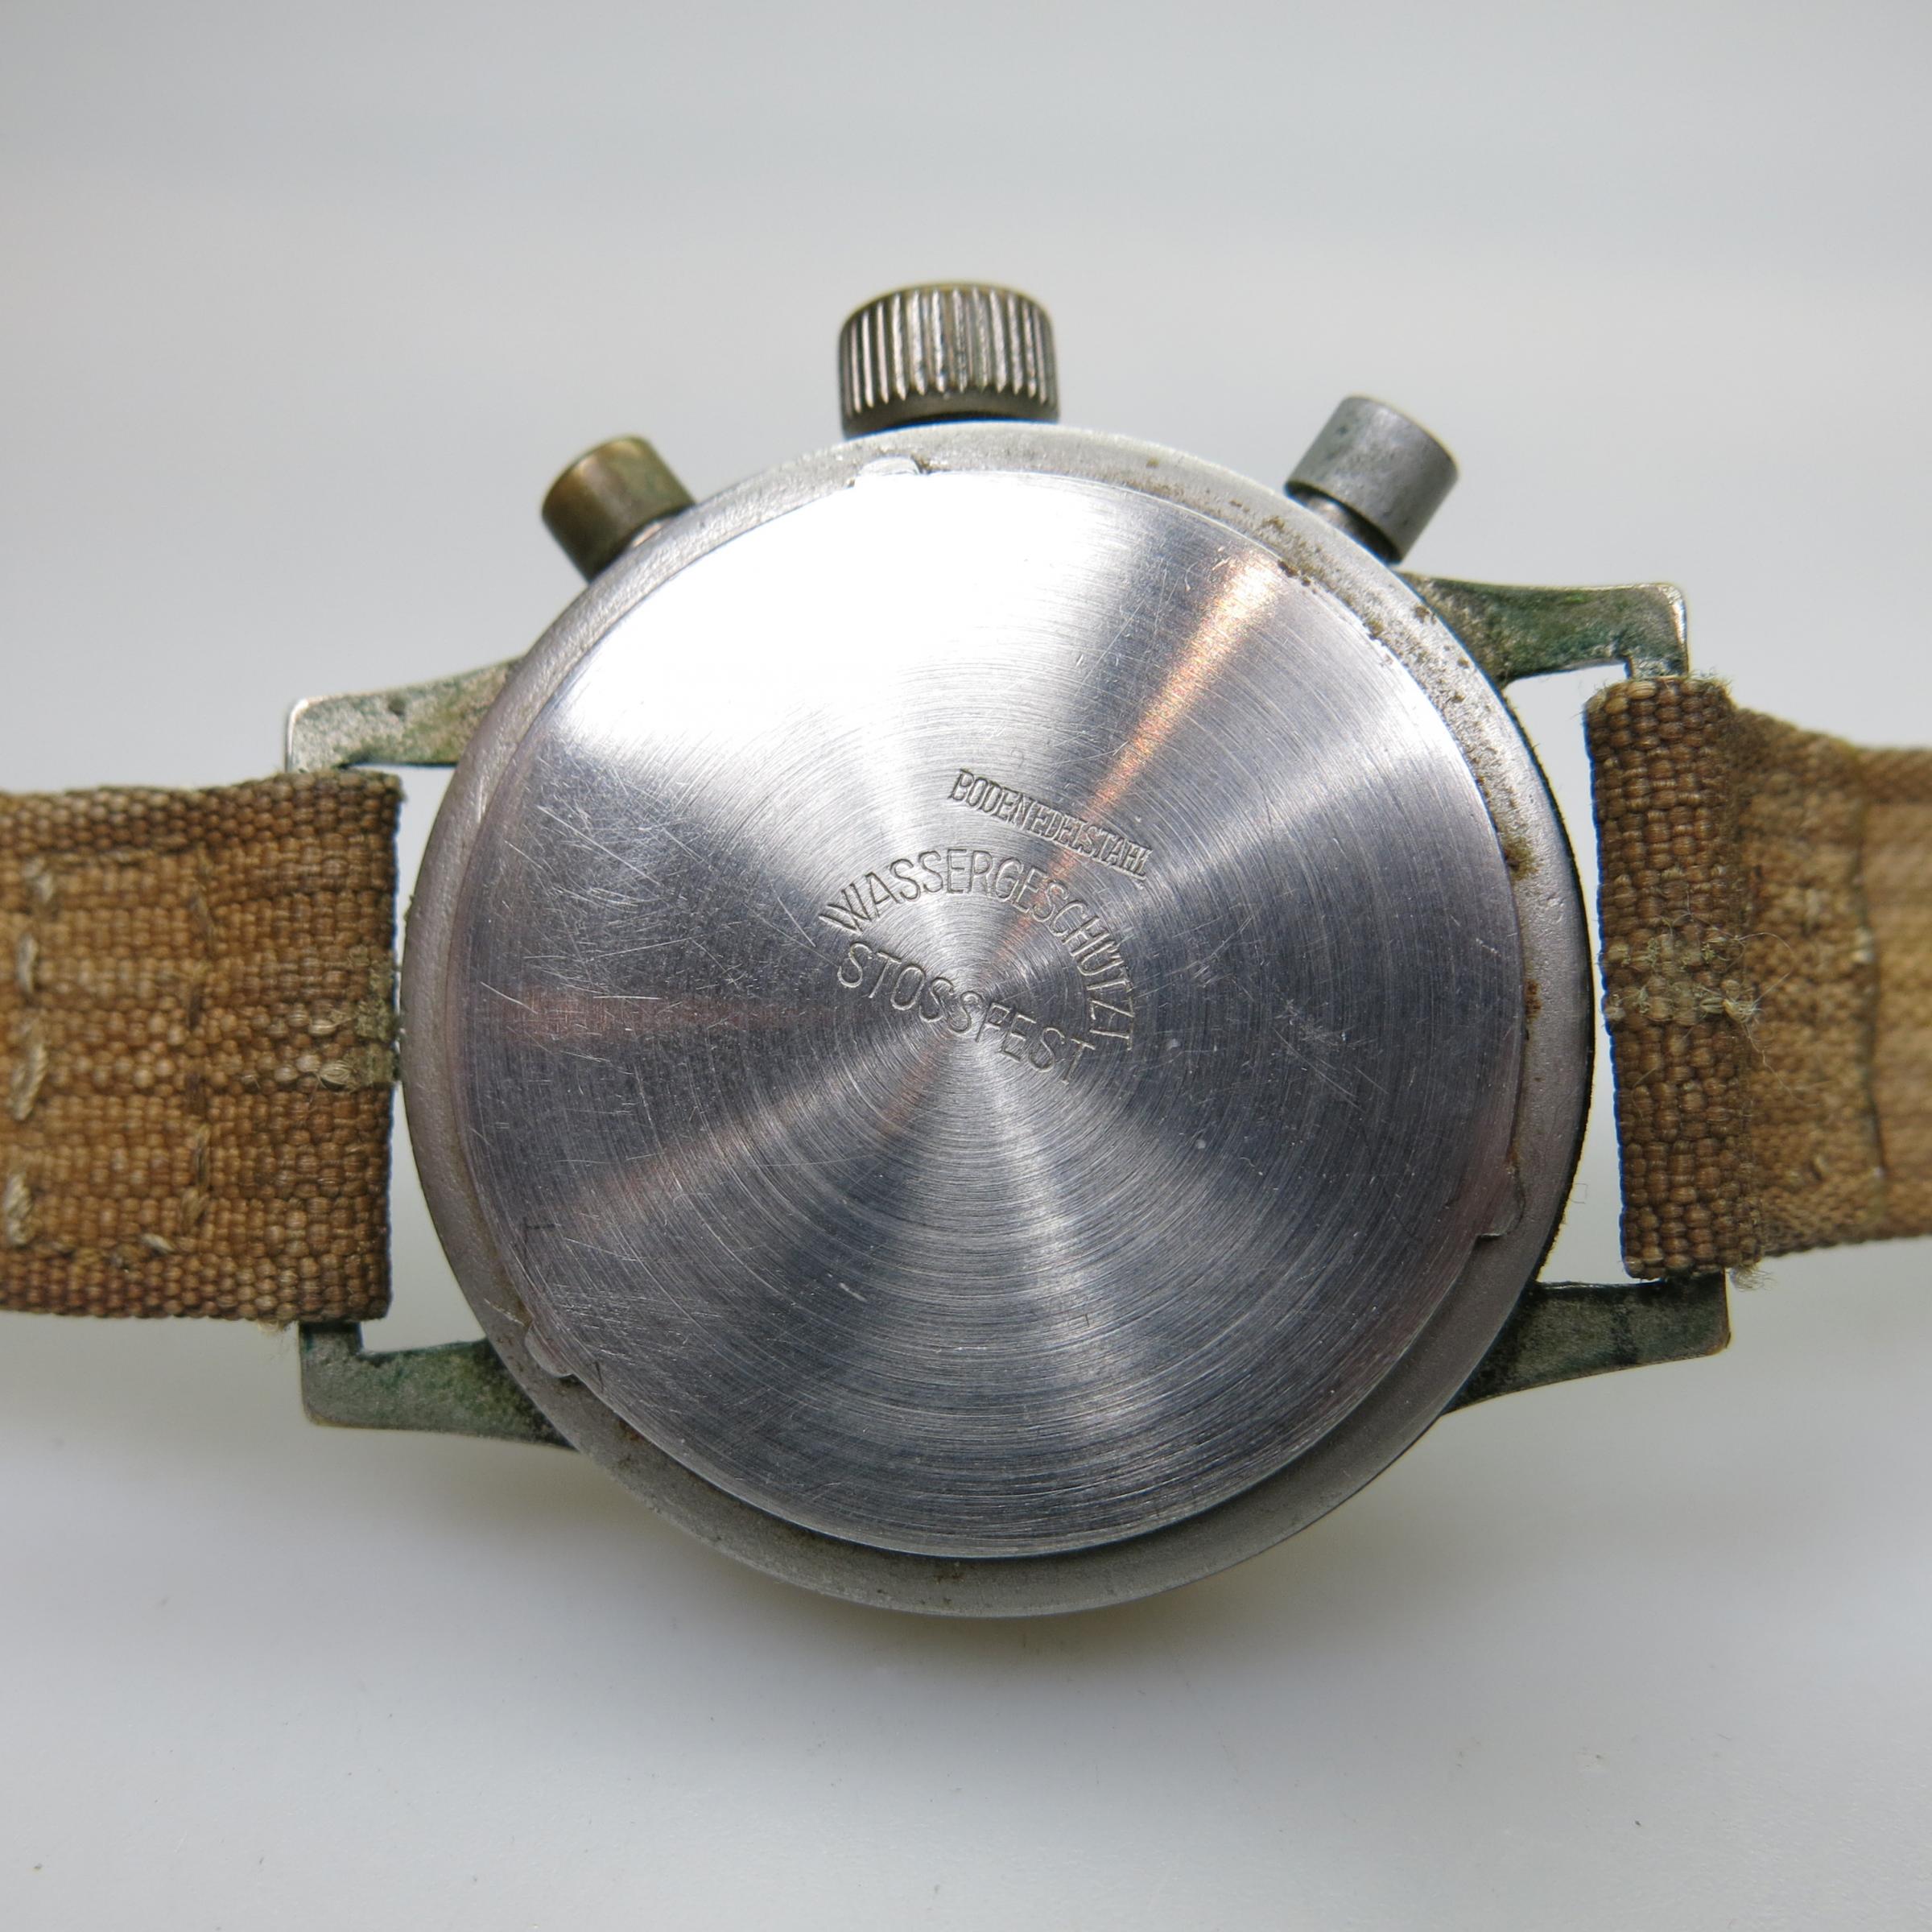 Hanhart Wristwatch With Chronograph